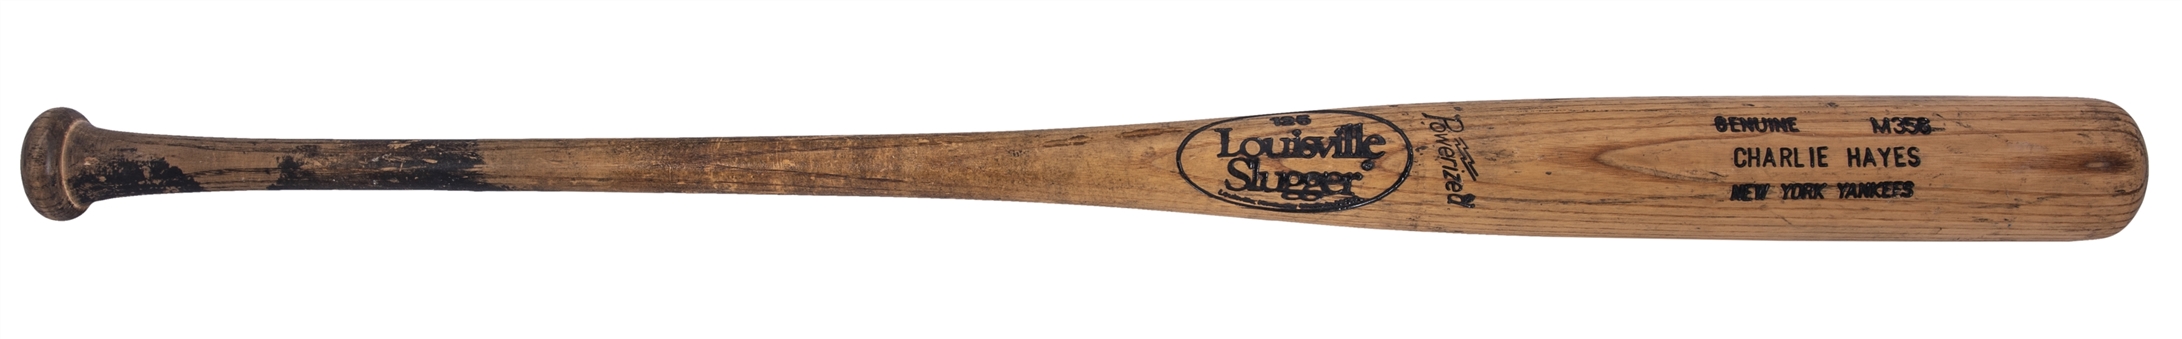 1997 Charlie Hayes Yankees Game Used Louisville Slugger Genuine Model 356 Bat (PSA/DNA GU 10)